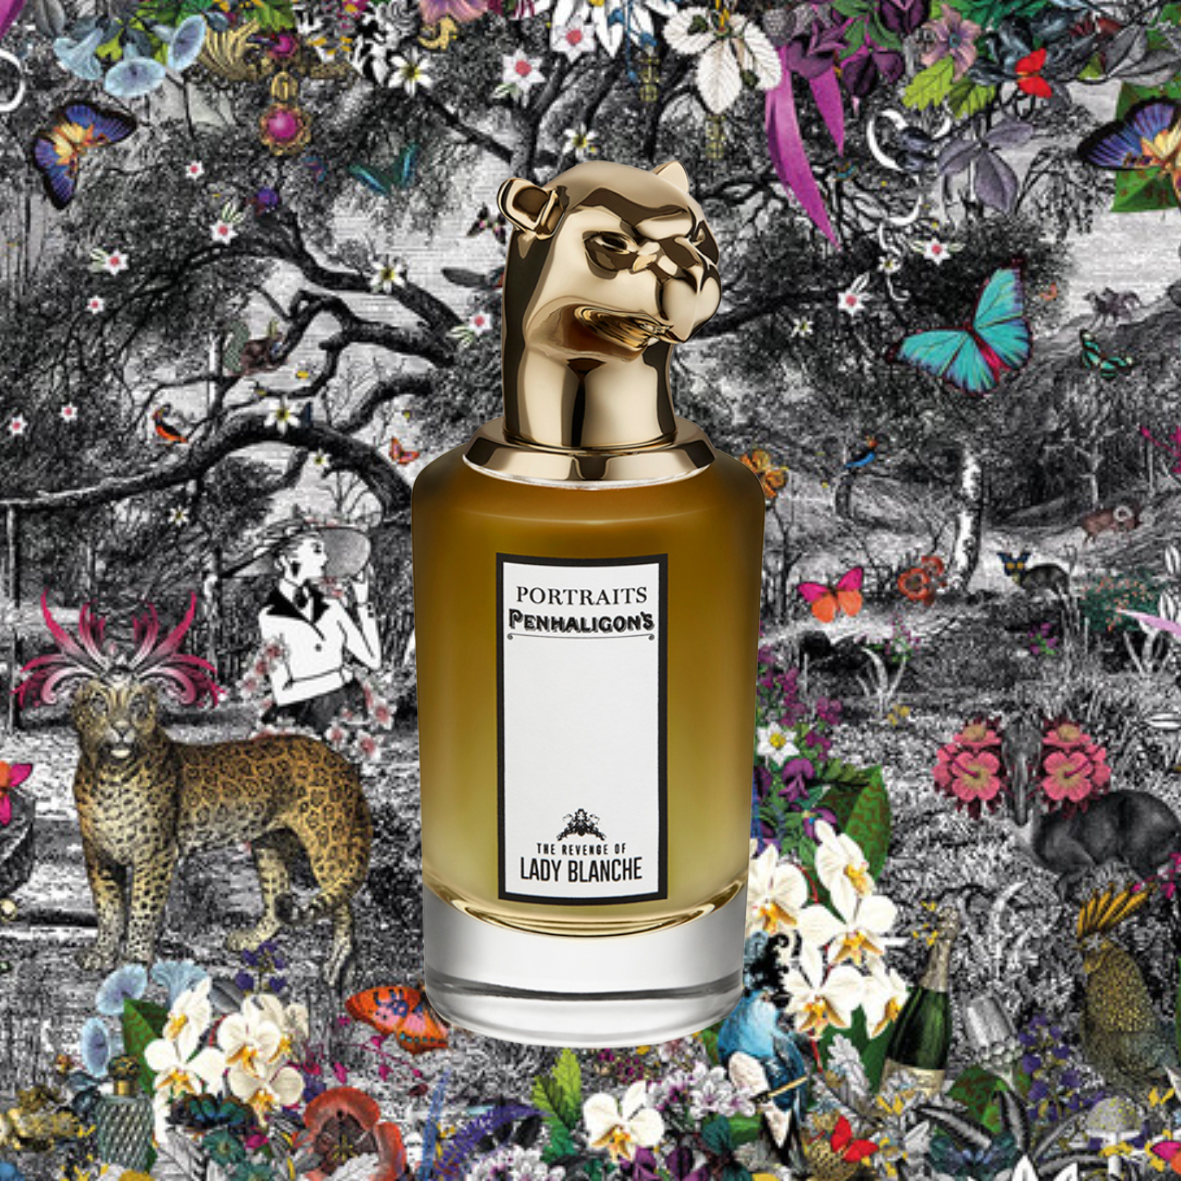 Penhaligon's The Revenge Of Lady Blanche
Best Green Perfumes